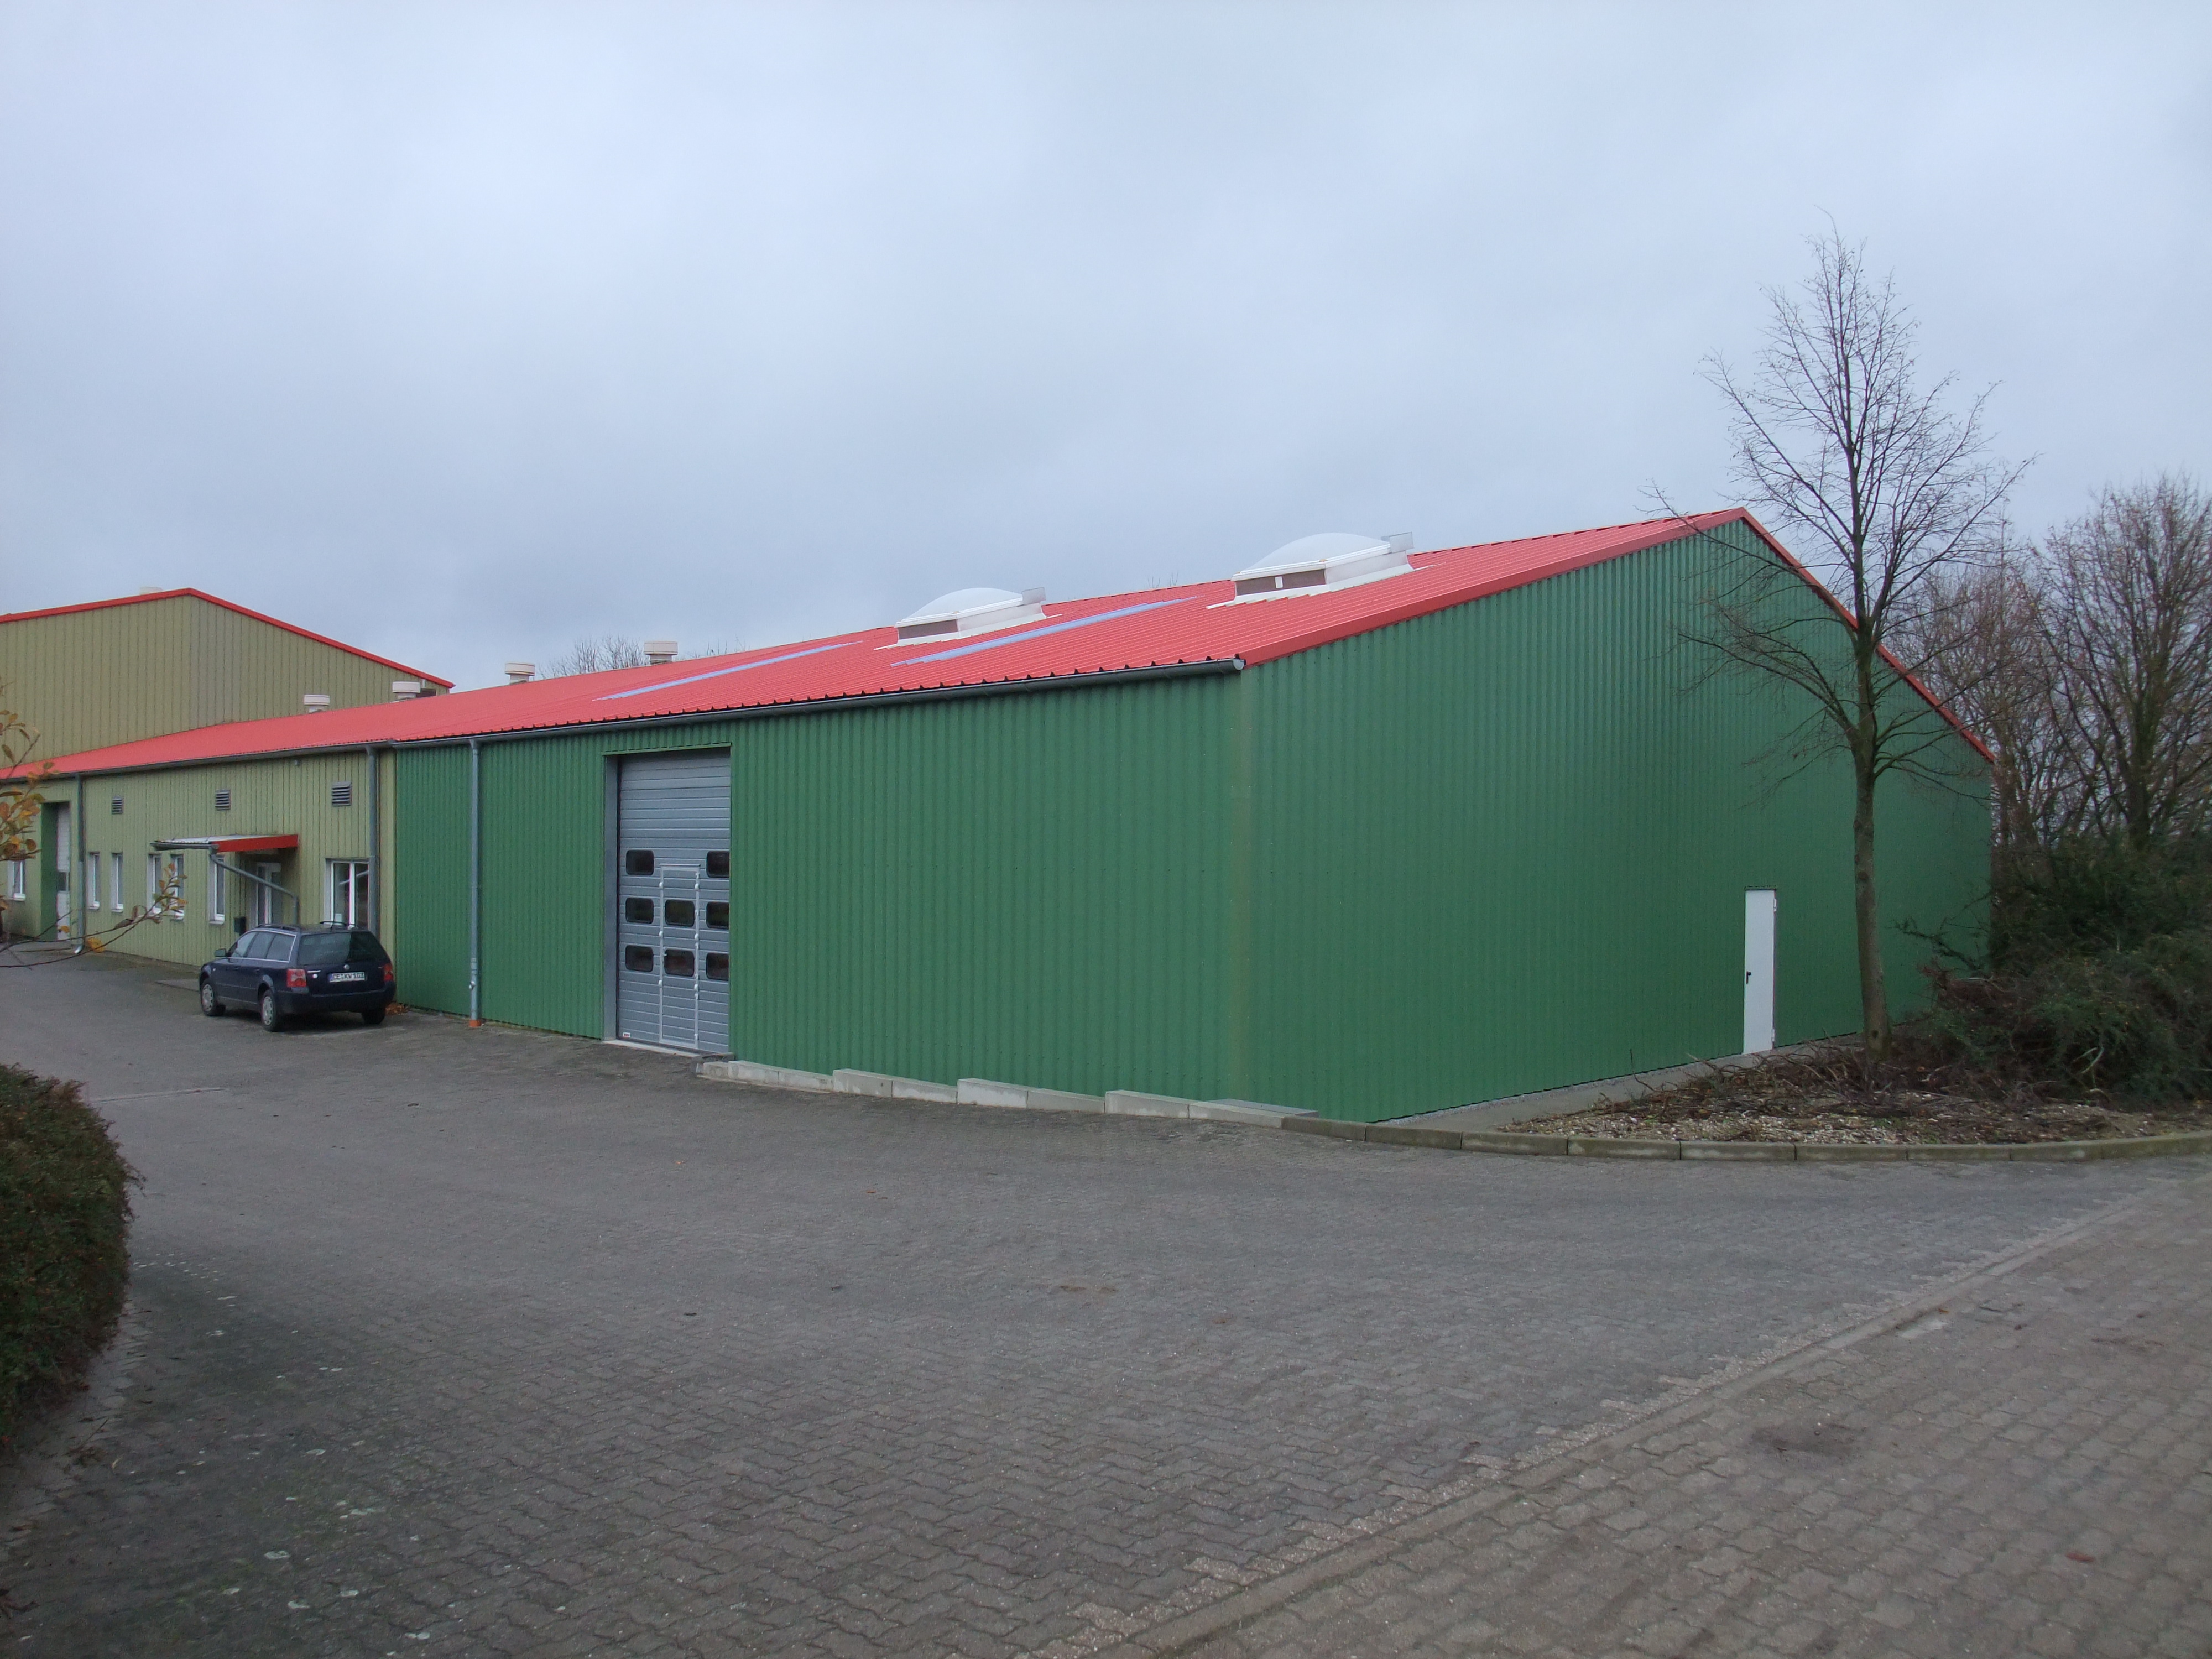 KWS storage facility in Bierbergen